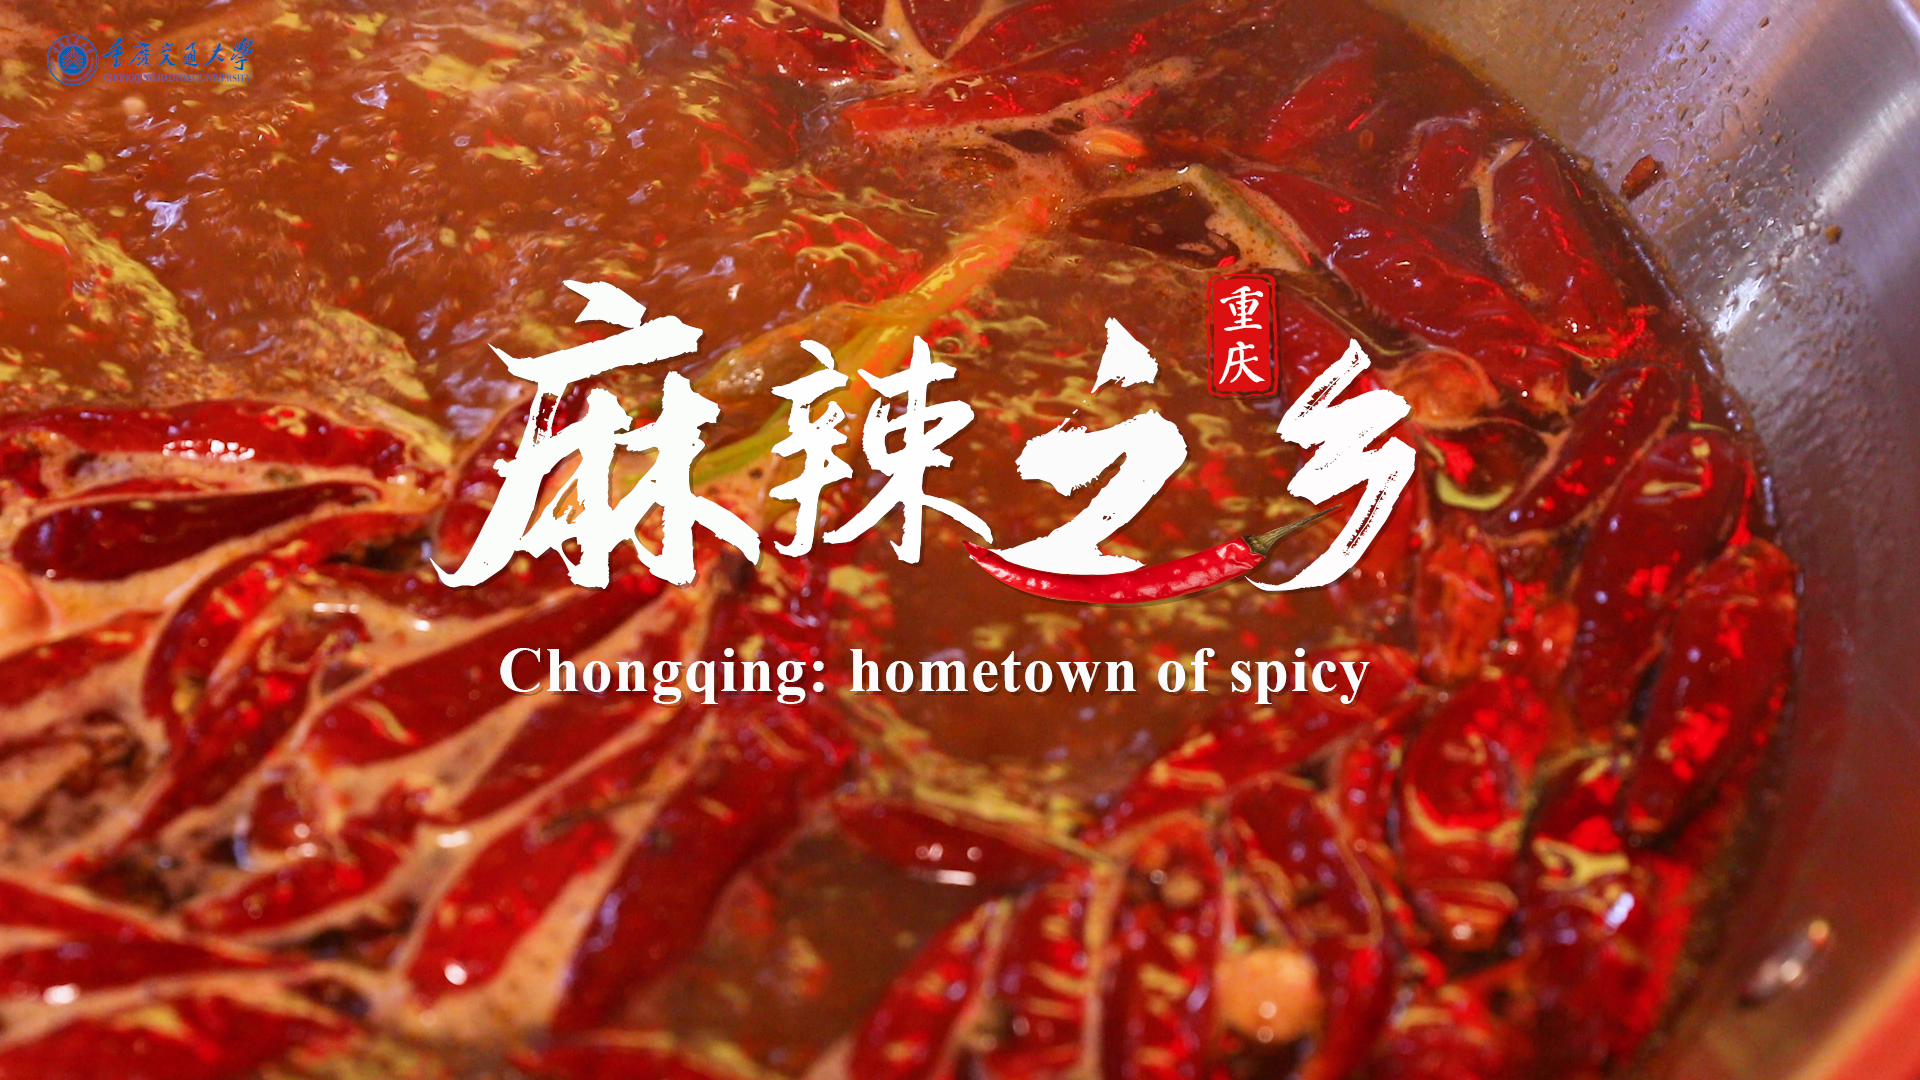 Magic Chongqing - the hometown of spicy